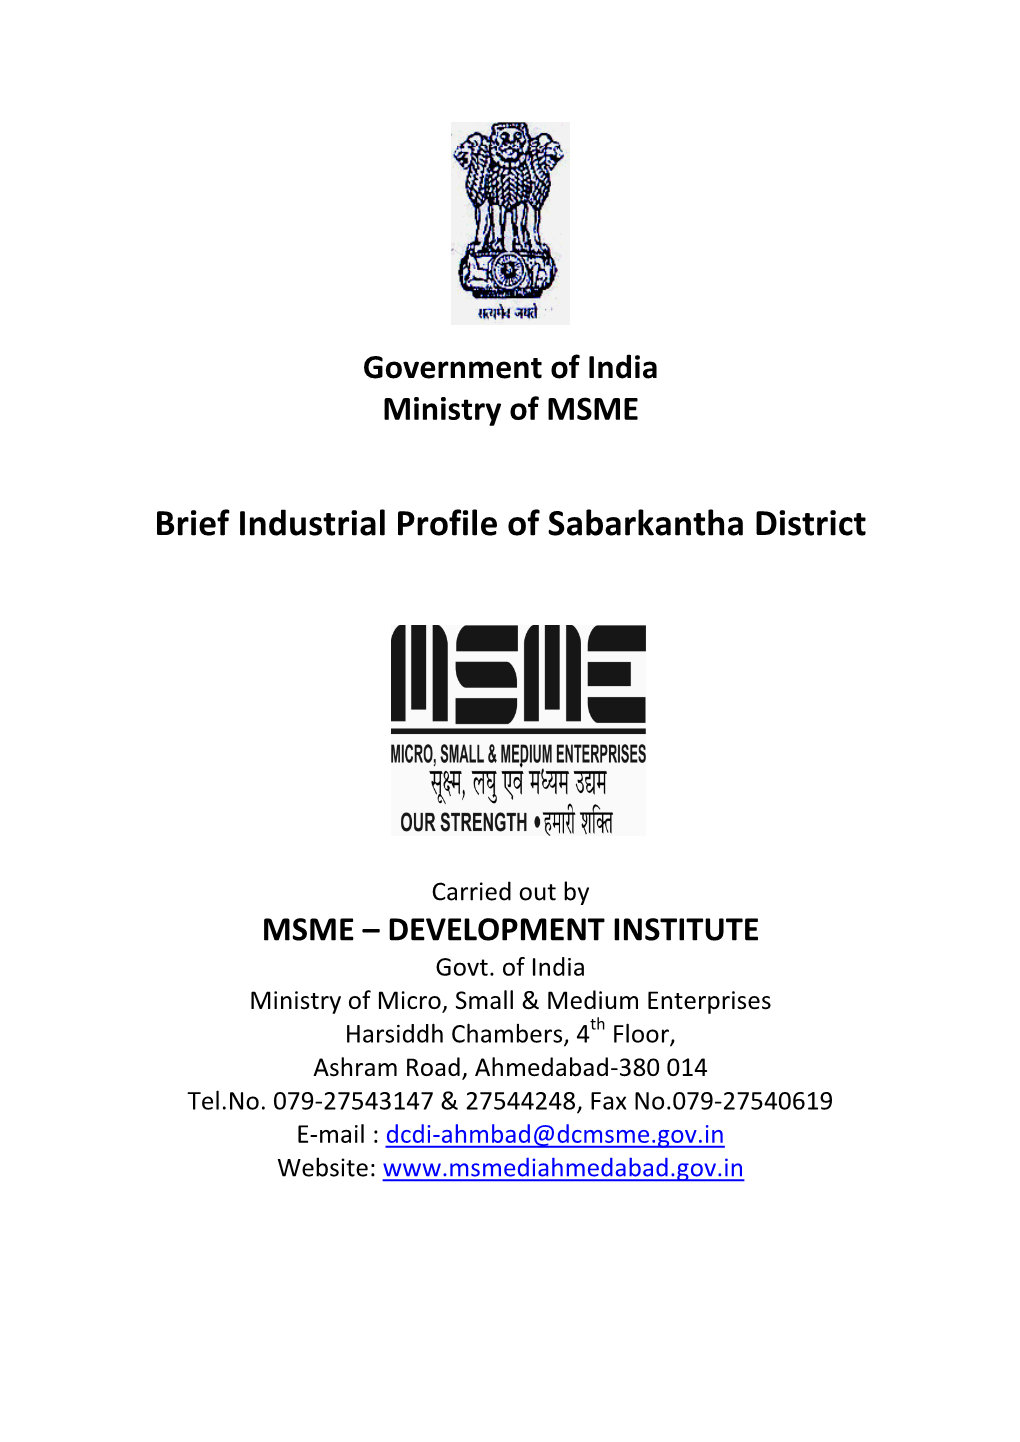 Brief Industrial Profile of Sabarkantha District